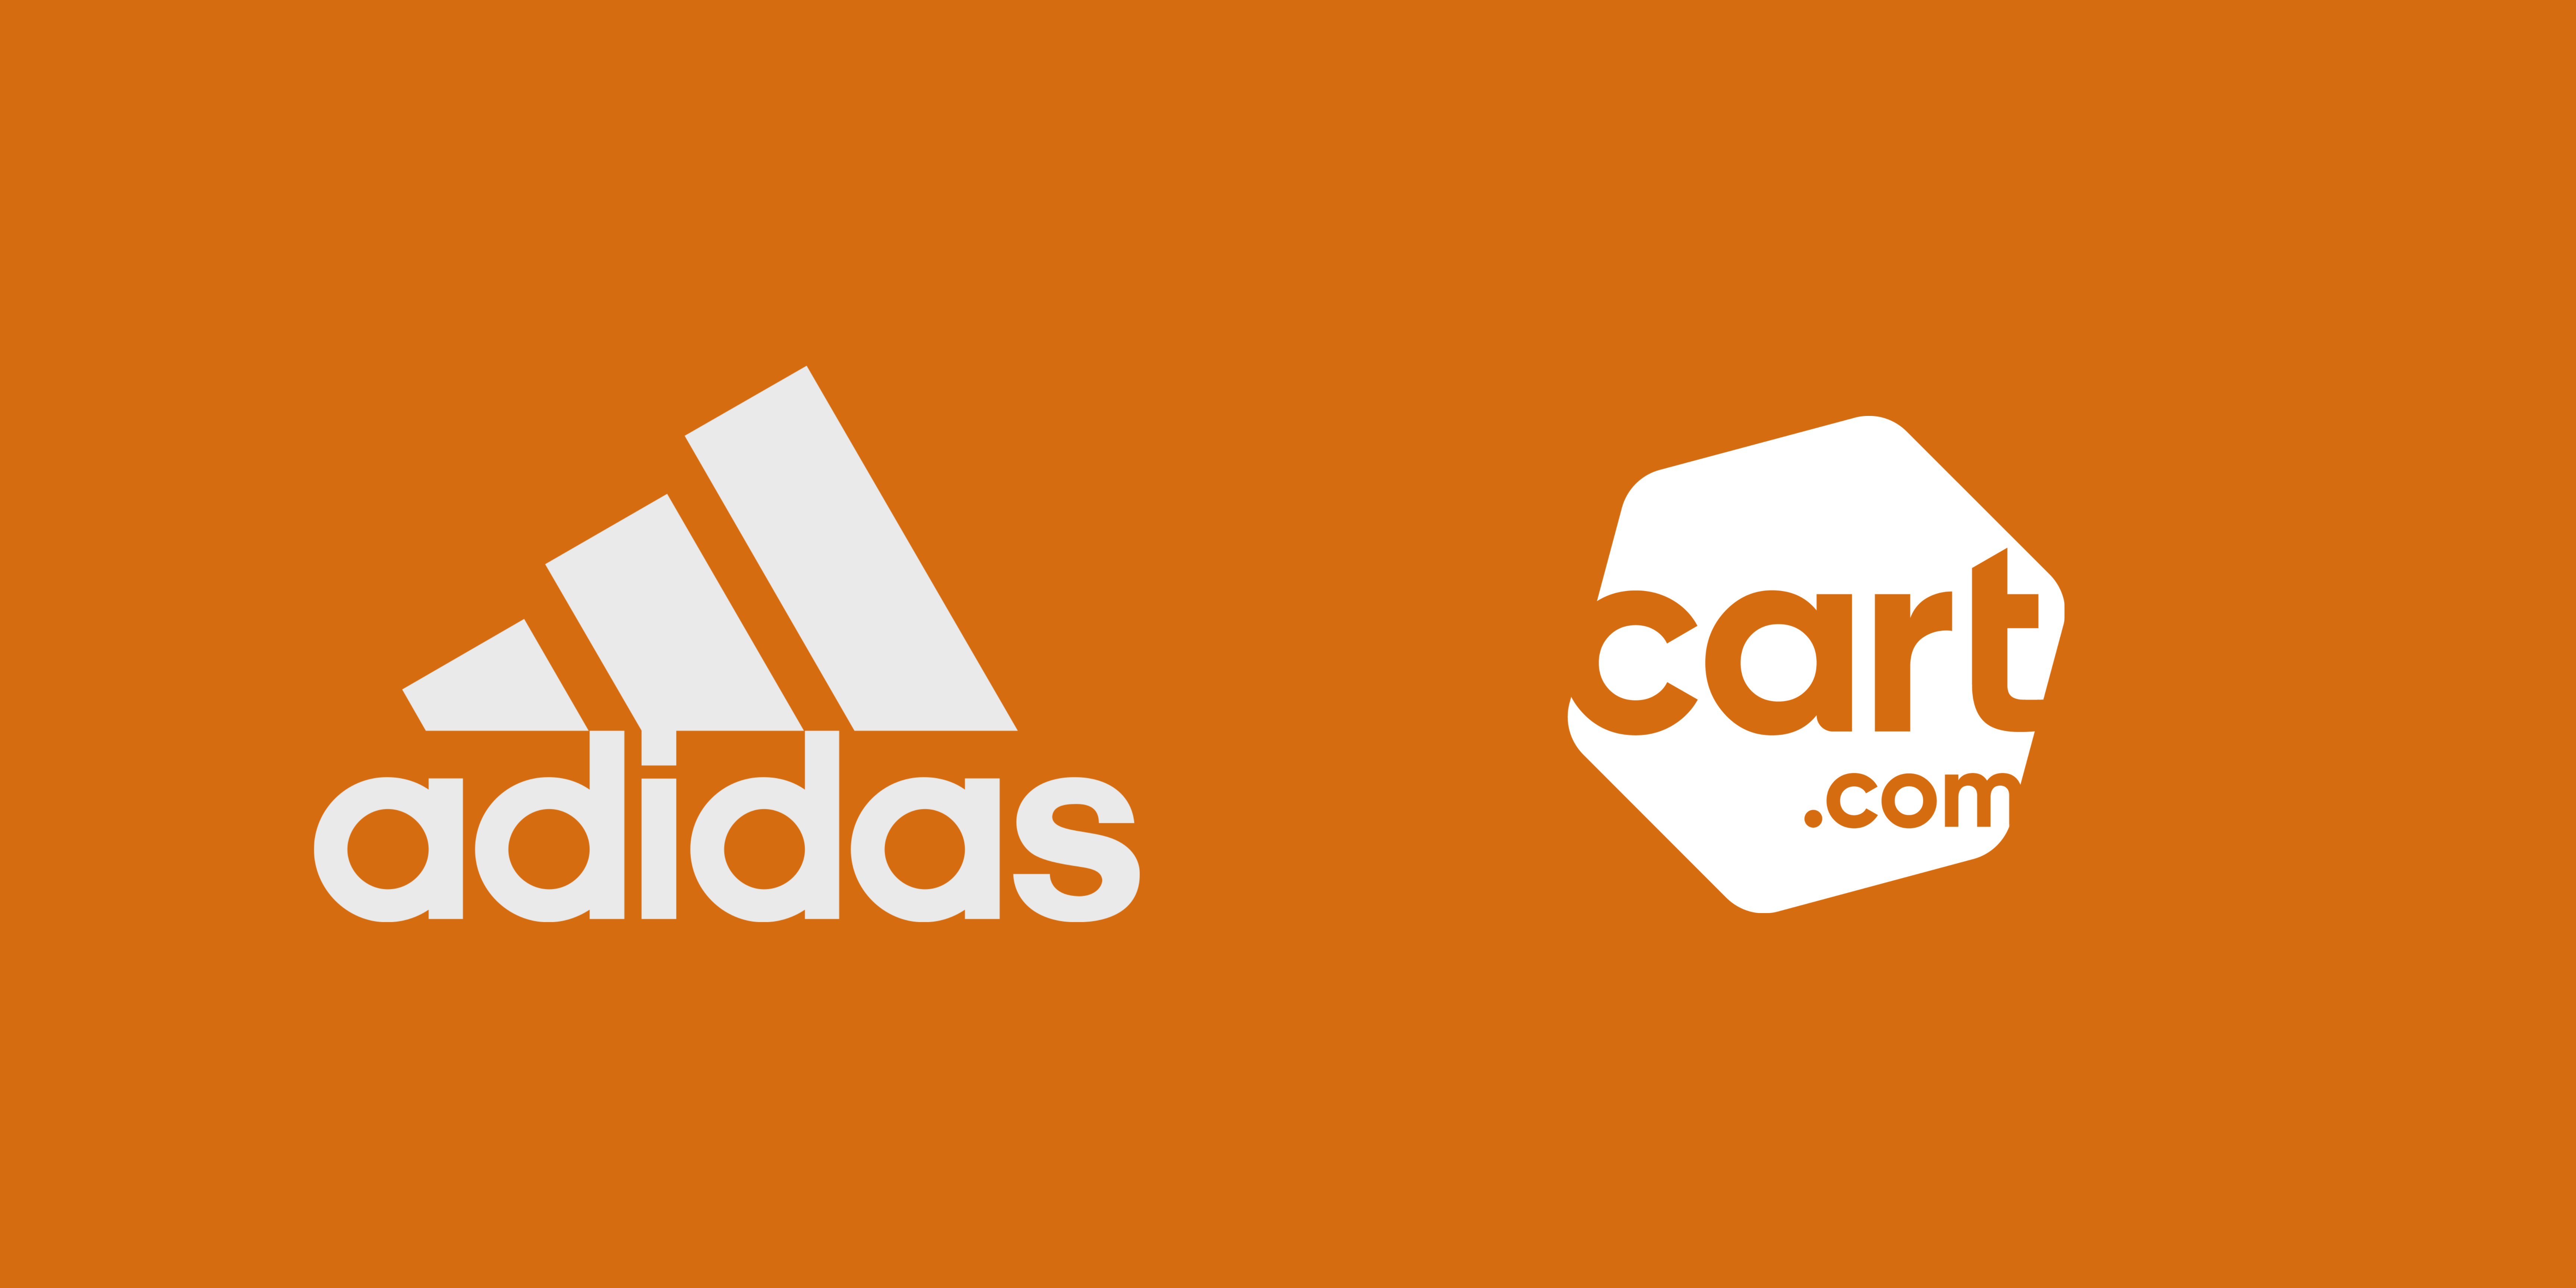 Case study: Adidas